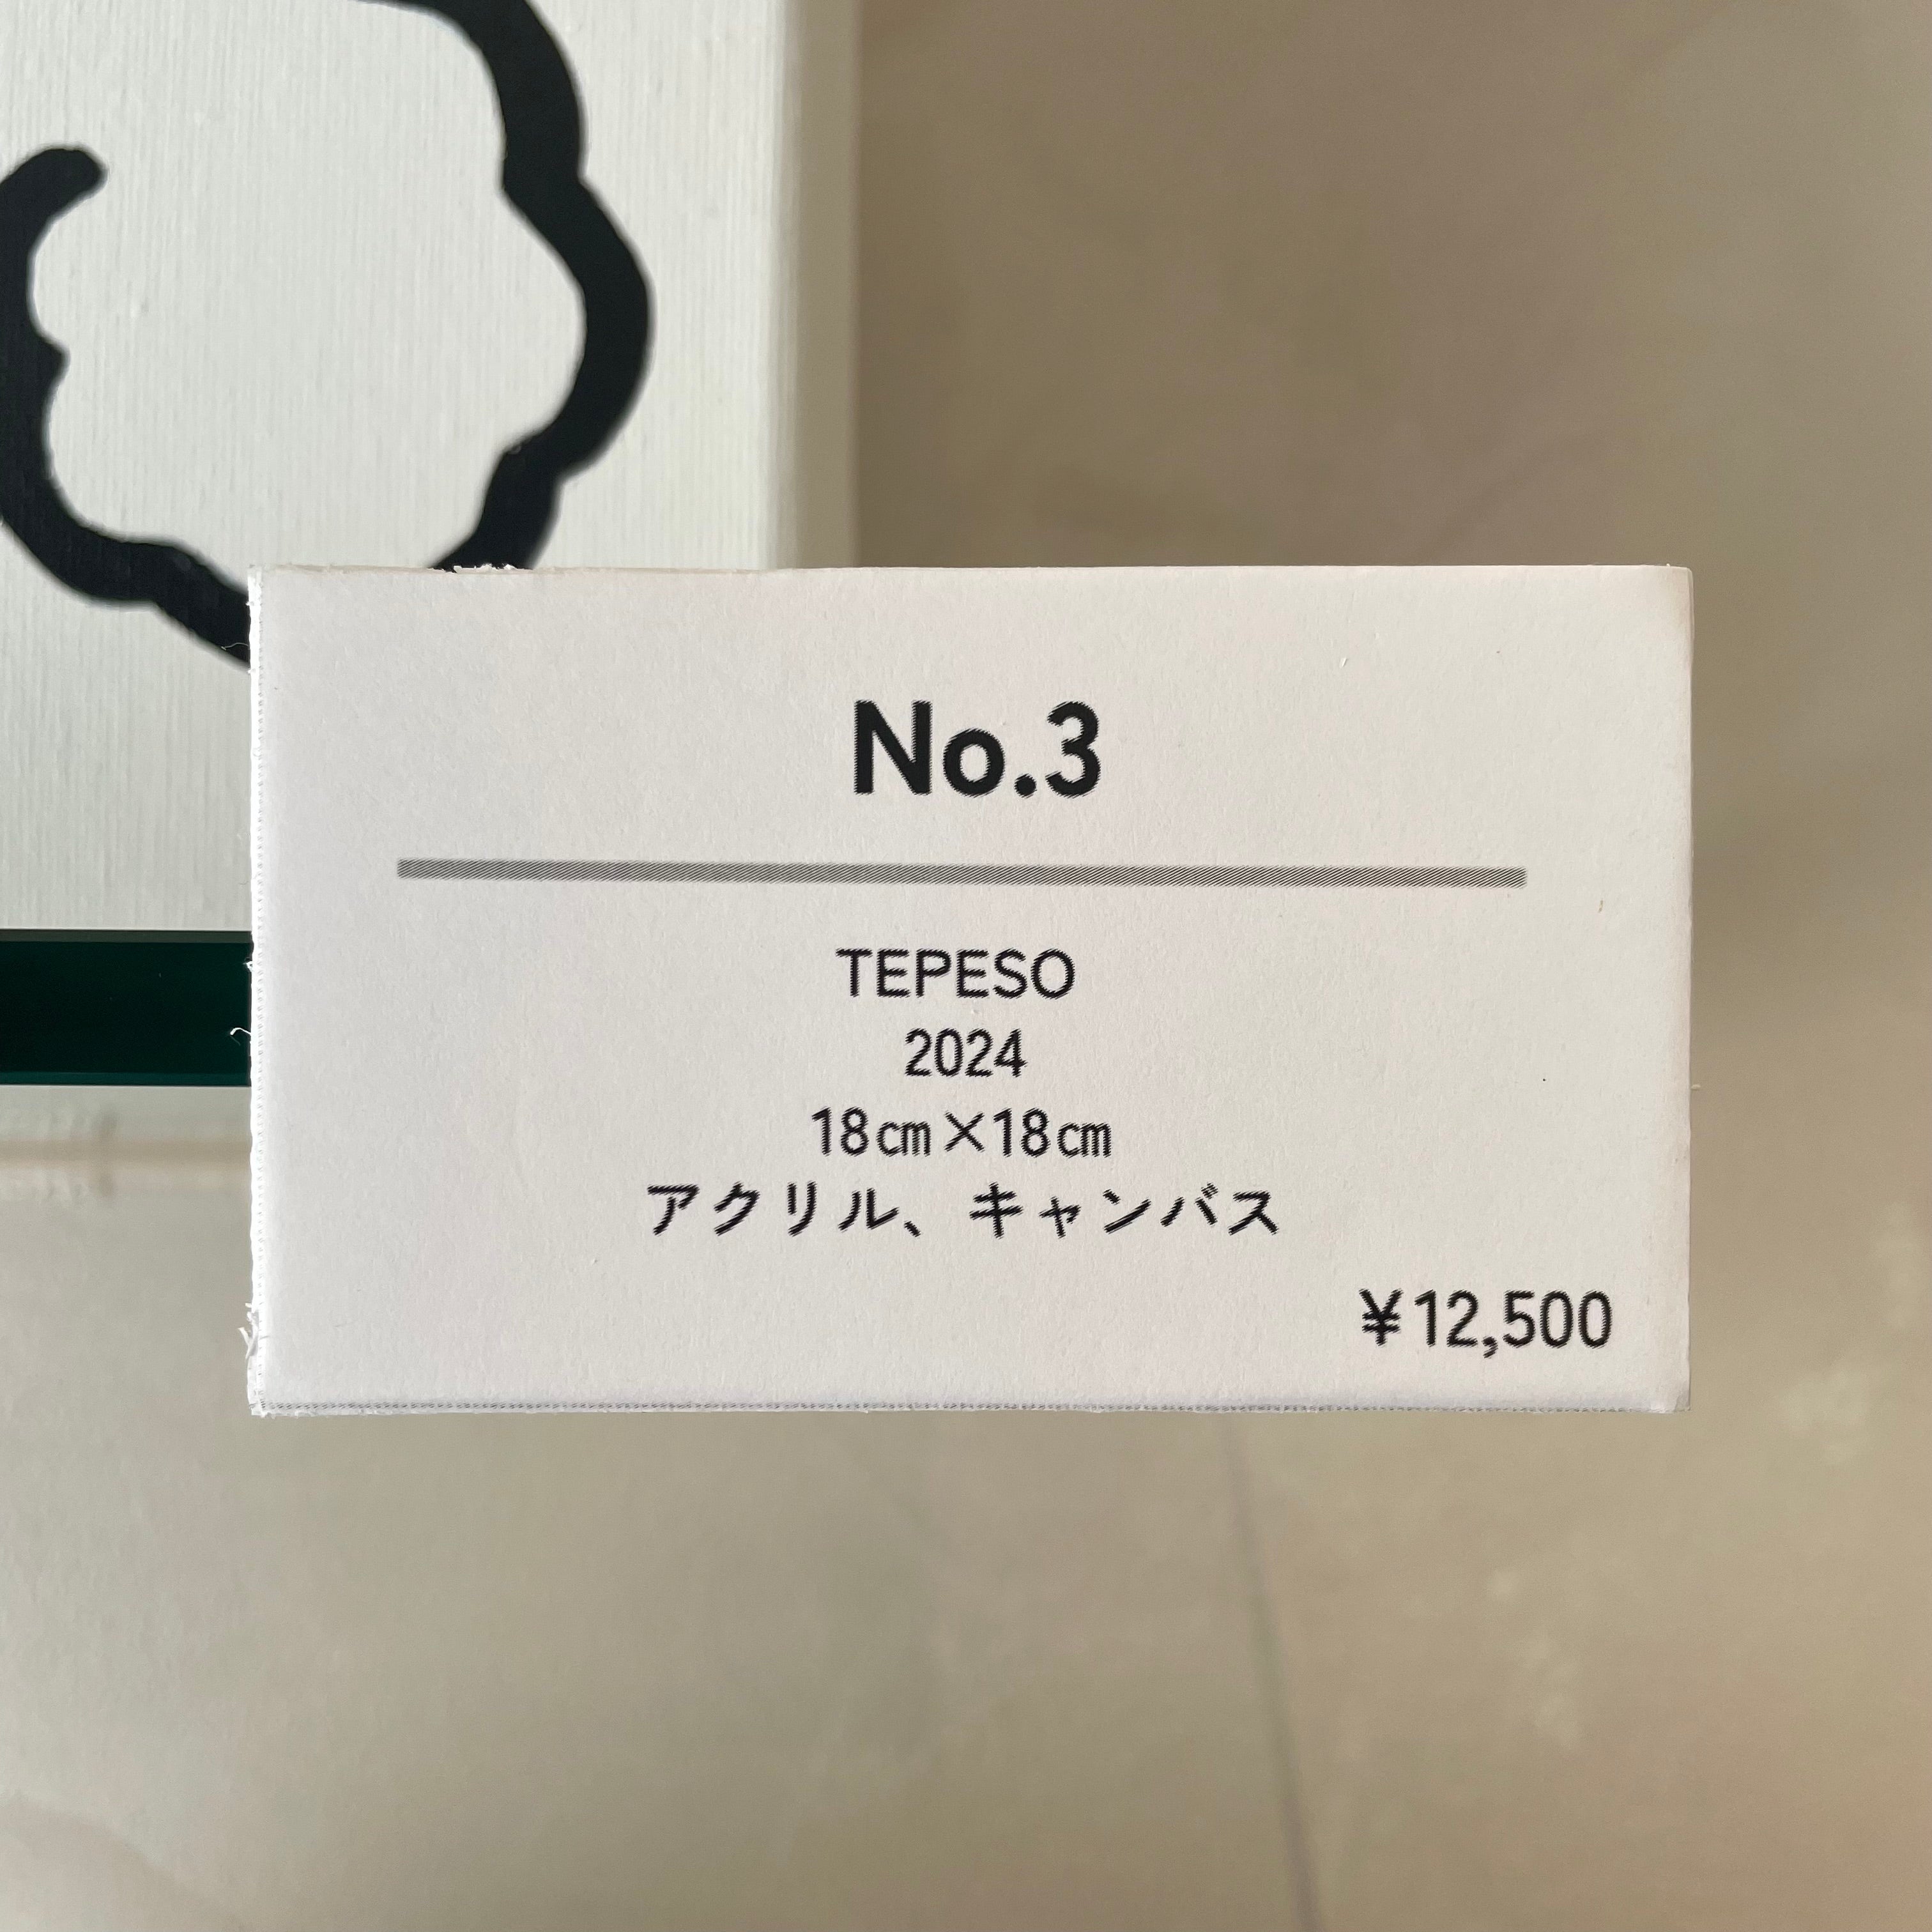 TEPESO 2024 NO.3